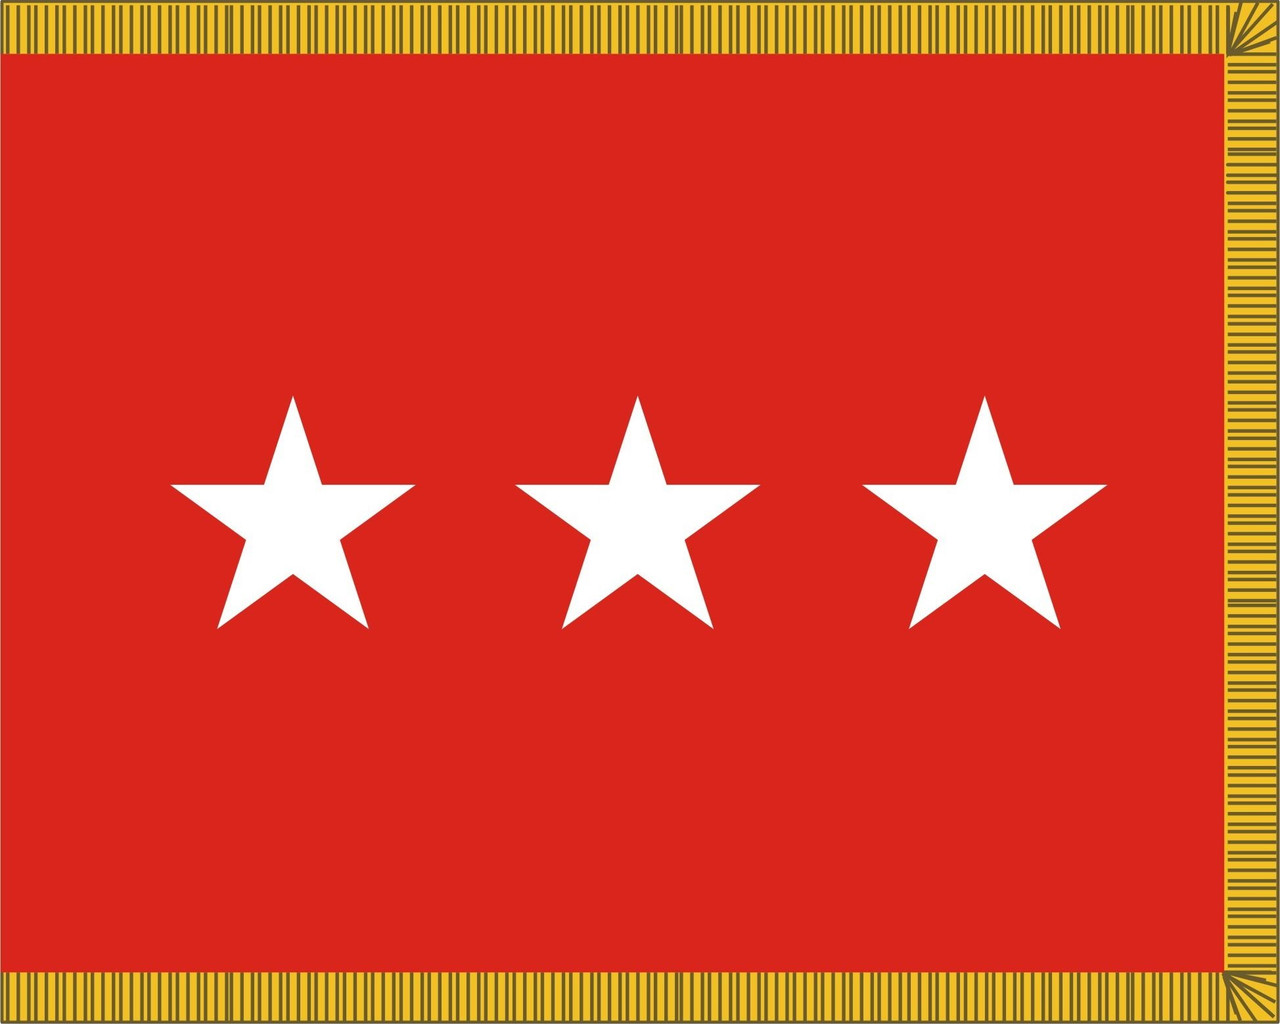 US Army Lieutenant General Flag, 3 Star Nylon Applique with Pole Hem and Gold Fringe, Size 3' X 4', GAR3103044